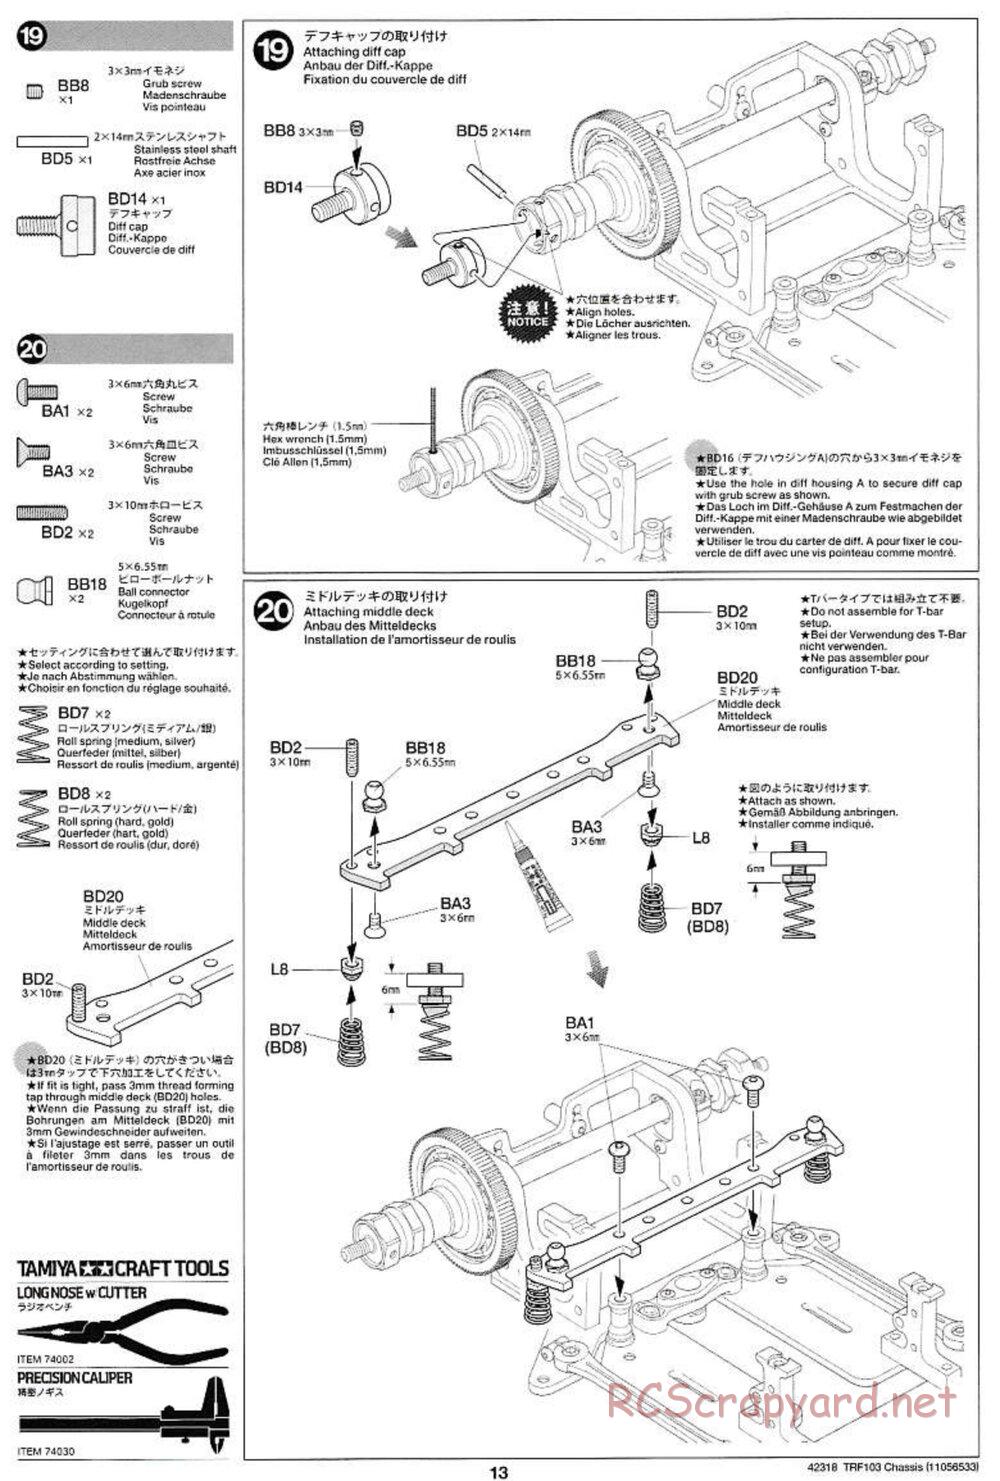 Tamiya - TRF103 Chassis - Manual - Page 13